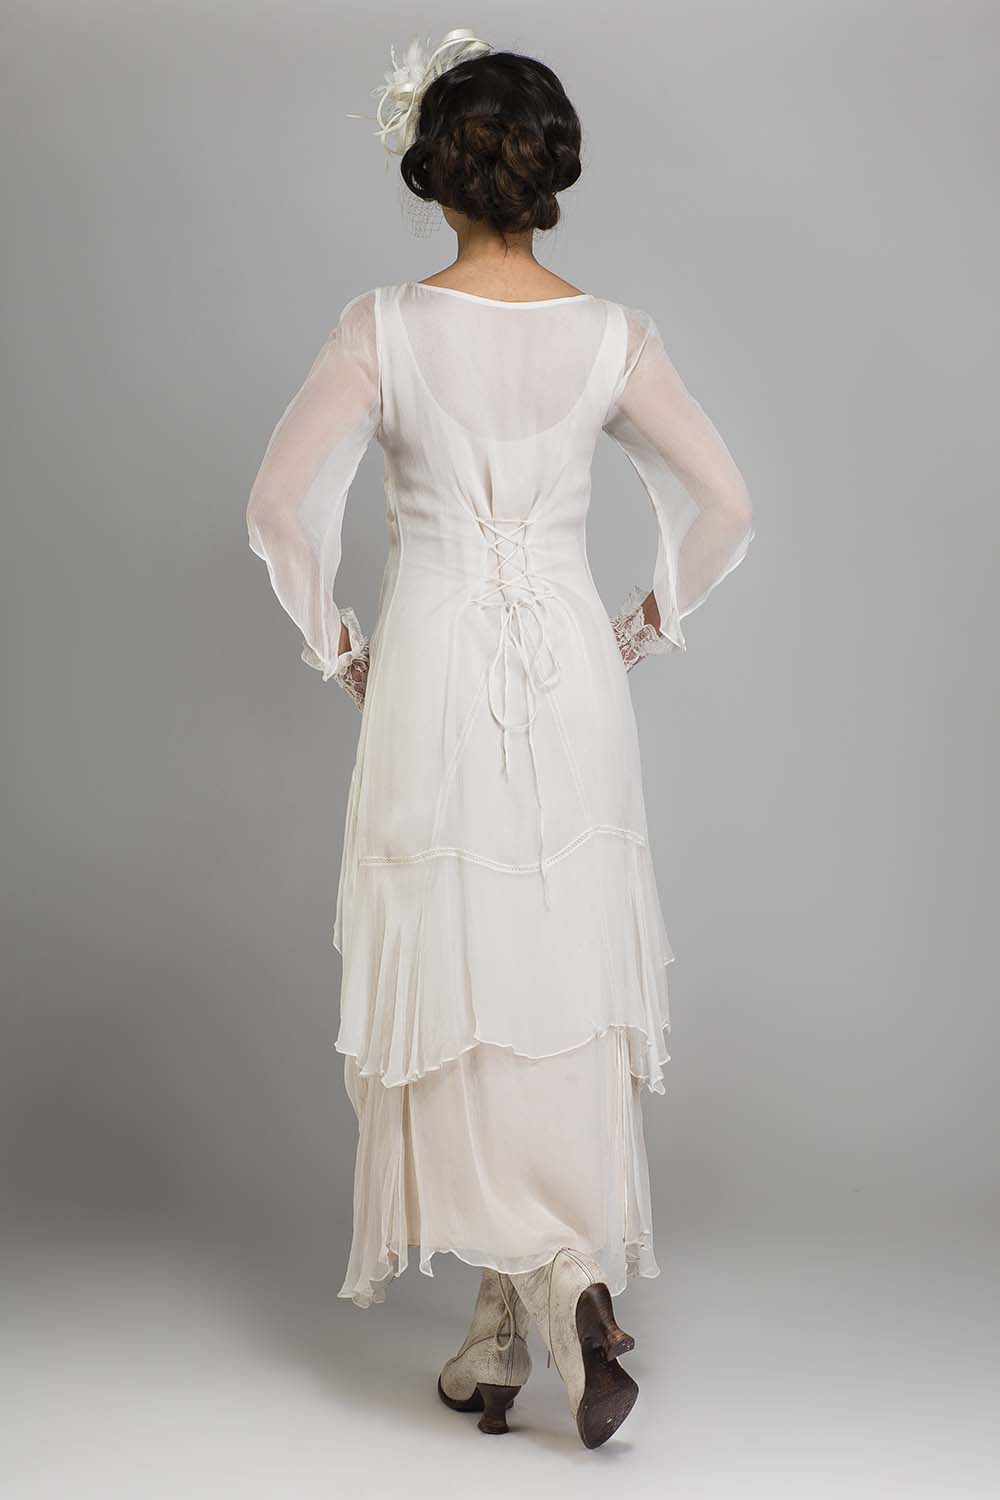 Great Gatsby Party Dress in Ivory by Nataya c